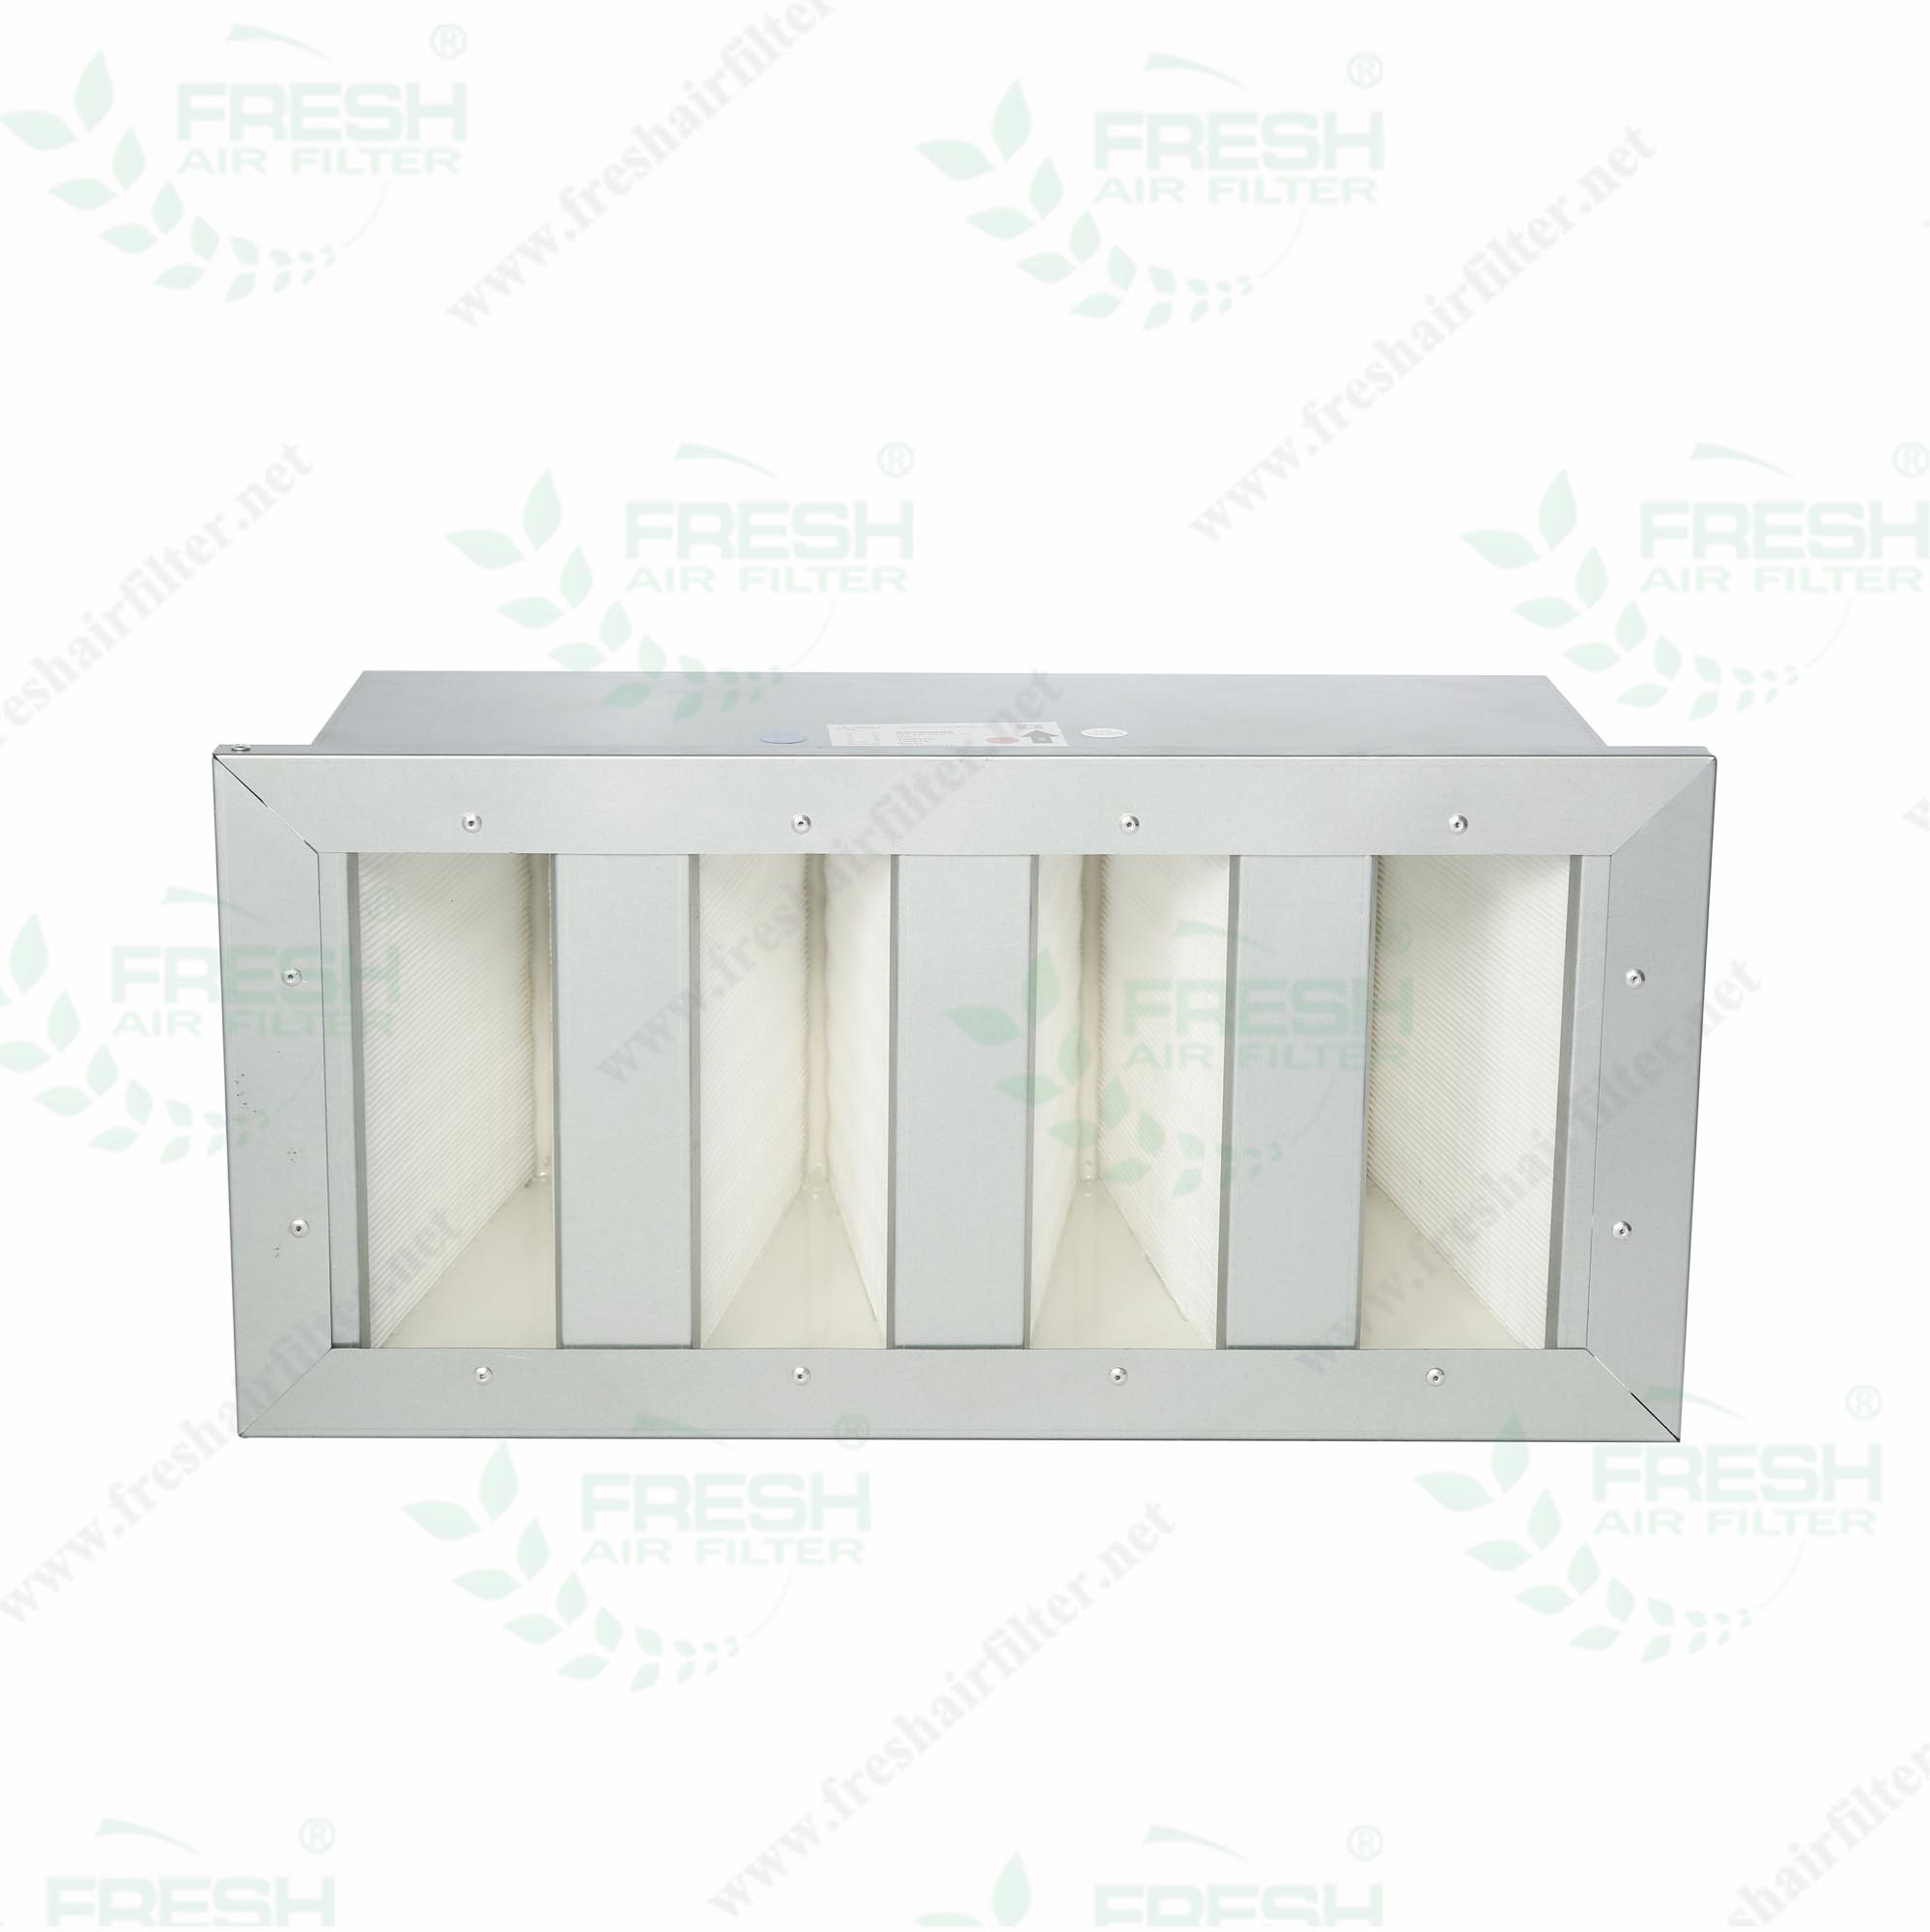 FRS-F4V592-G-E10-E0 V-Bank 4 Cells Combined Air Filter